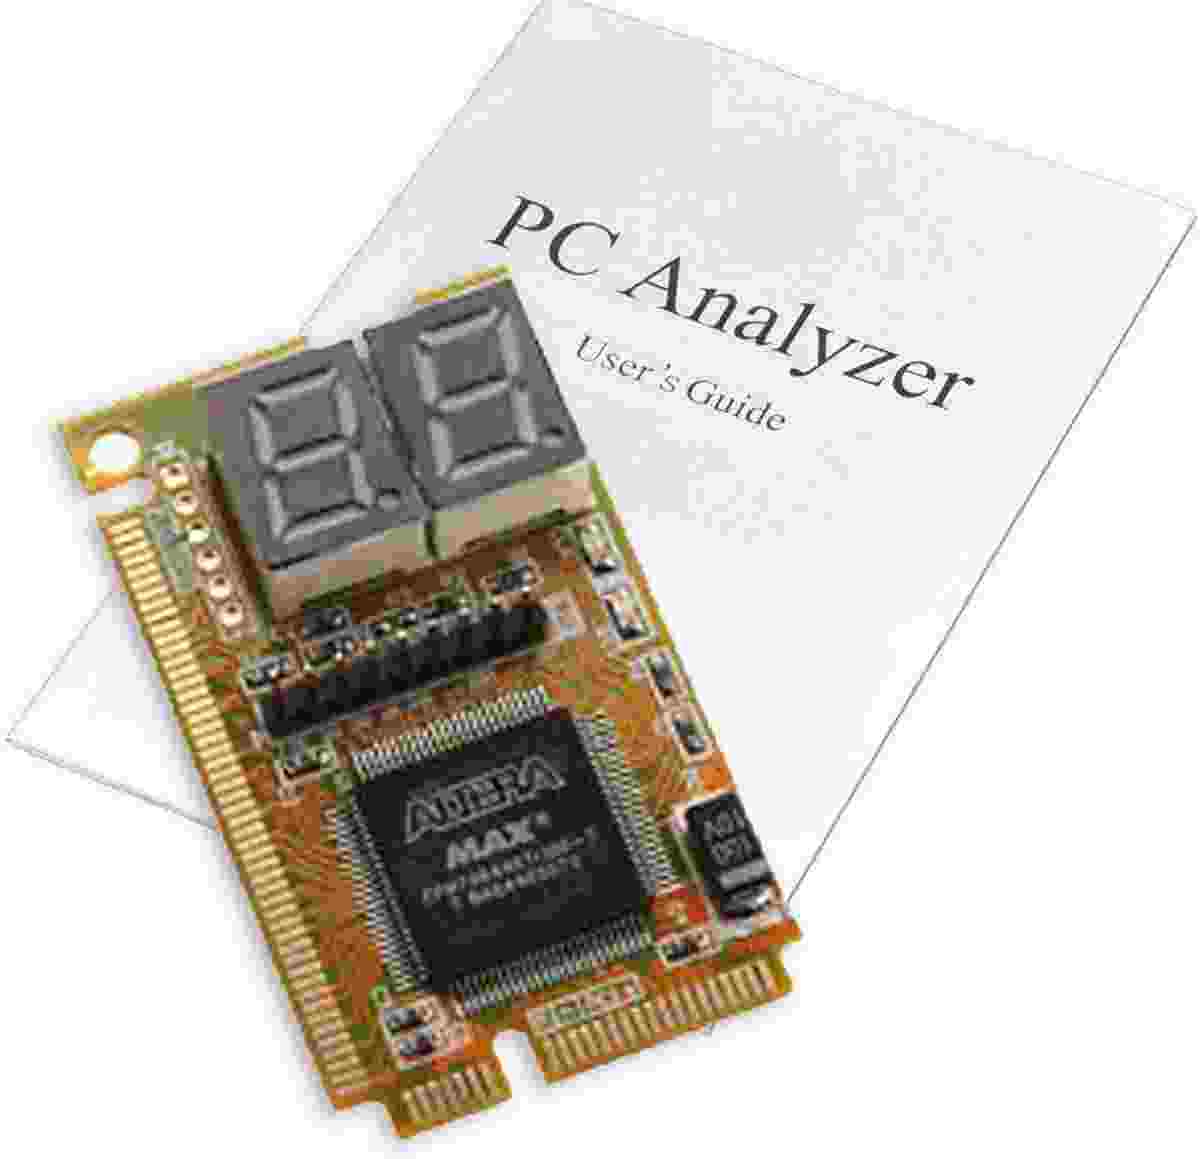 Debug Card 3in1 Mini PCI Pci-e Lpc with User Manual PC Laptop Notebook Combo MotherBoard Debug Card Analyzer Tester